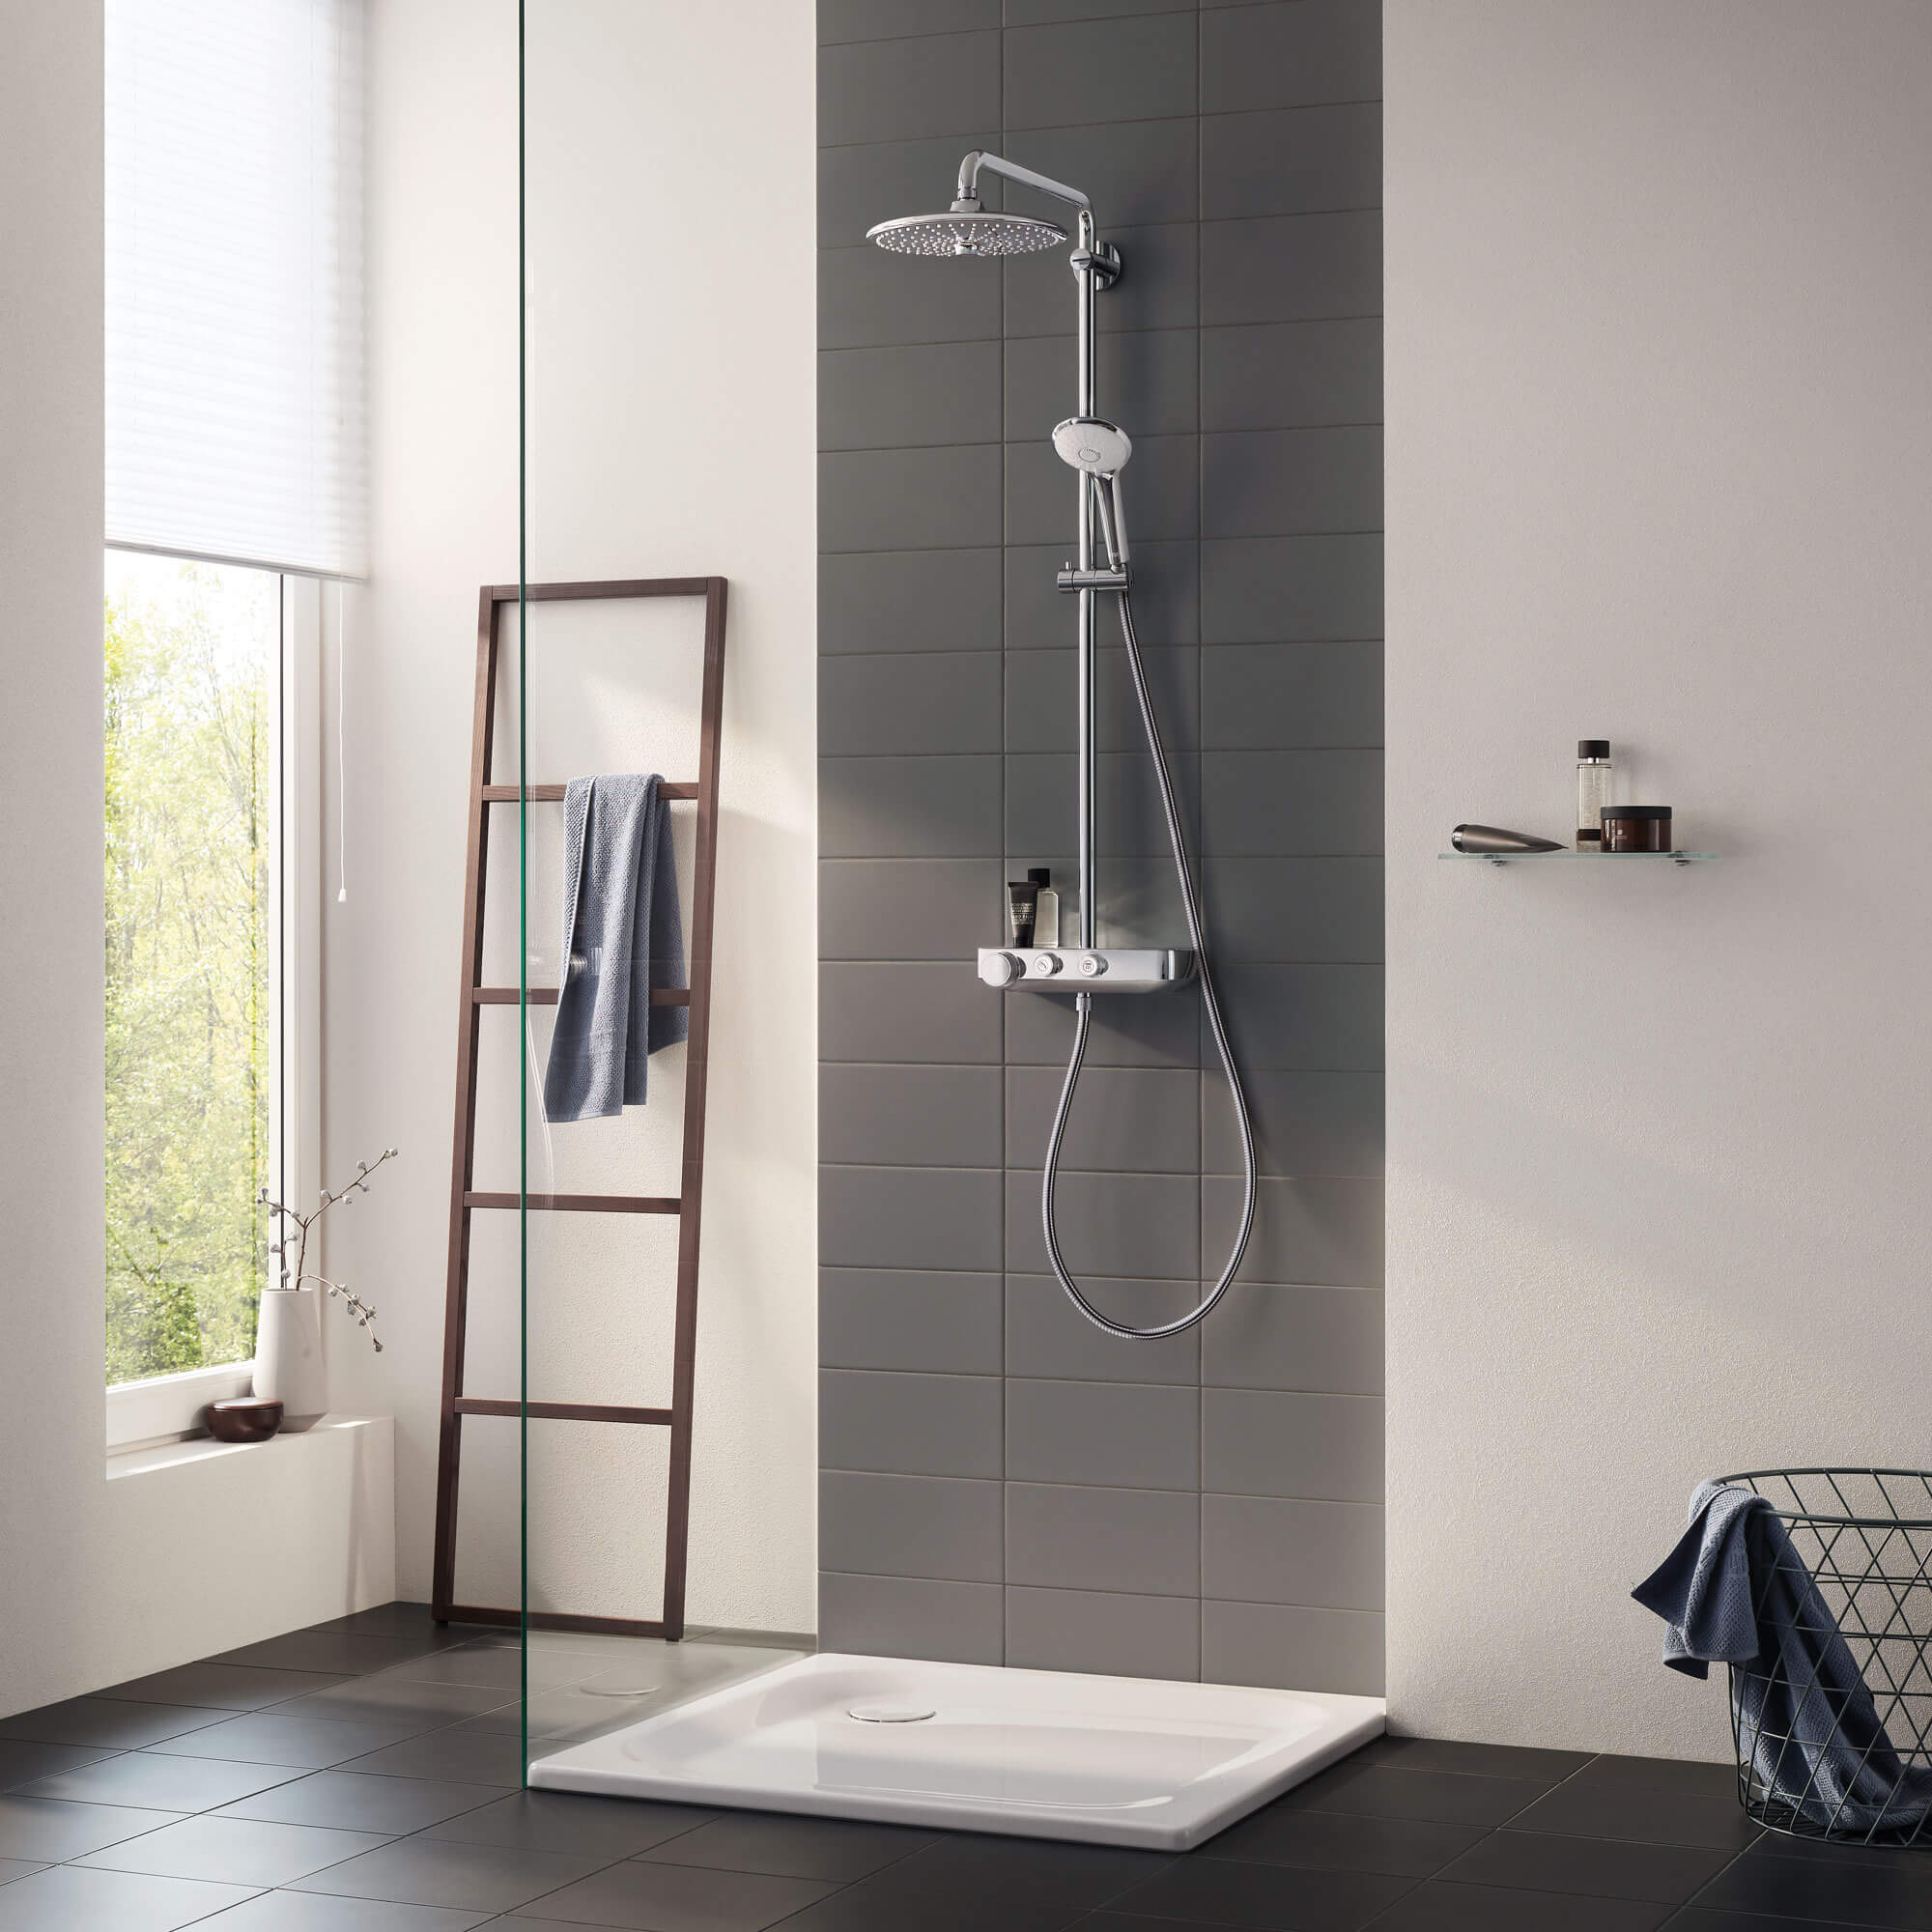 Euphoria smartcontrol shower displayed in a grey toned bathroom.